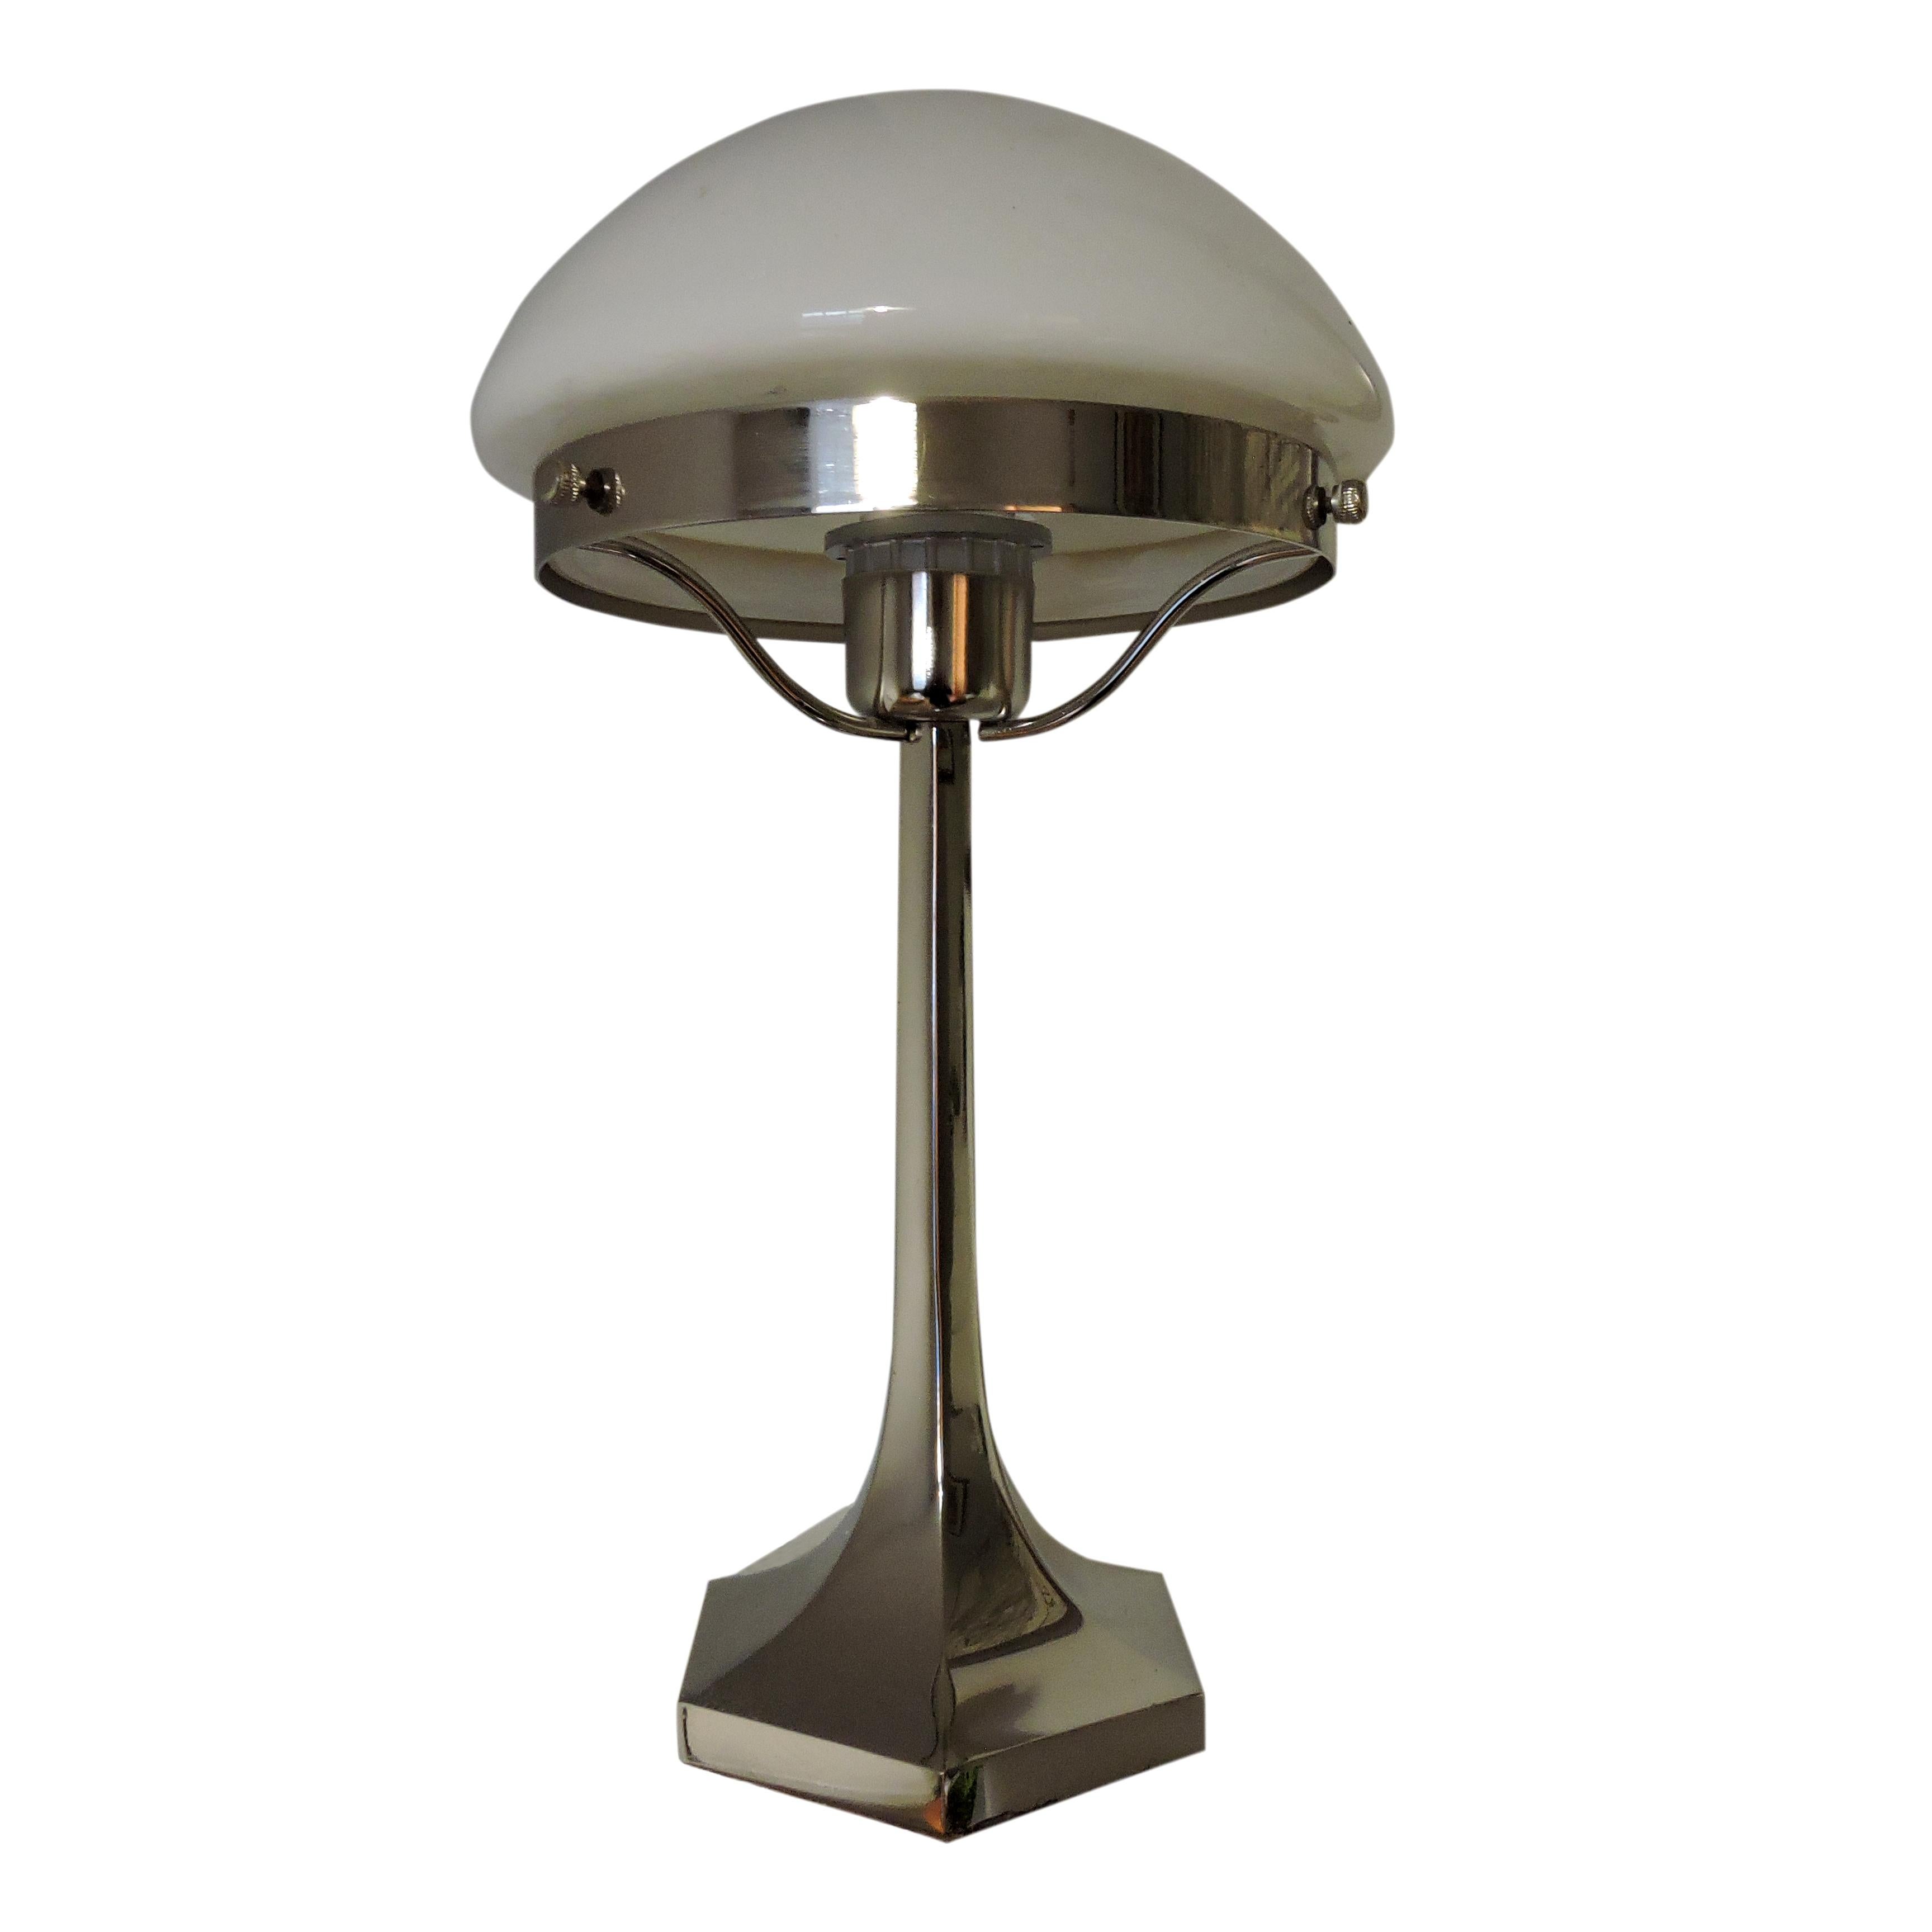 Art Deco Stainless Steel Table Lamp from Lustrerie Deknudt, 1920s For Sale